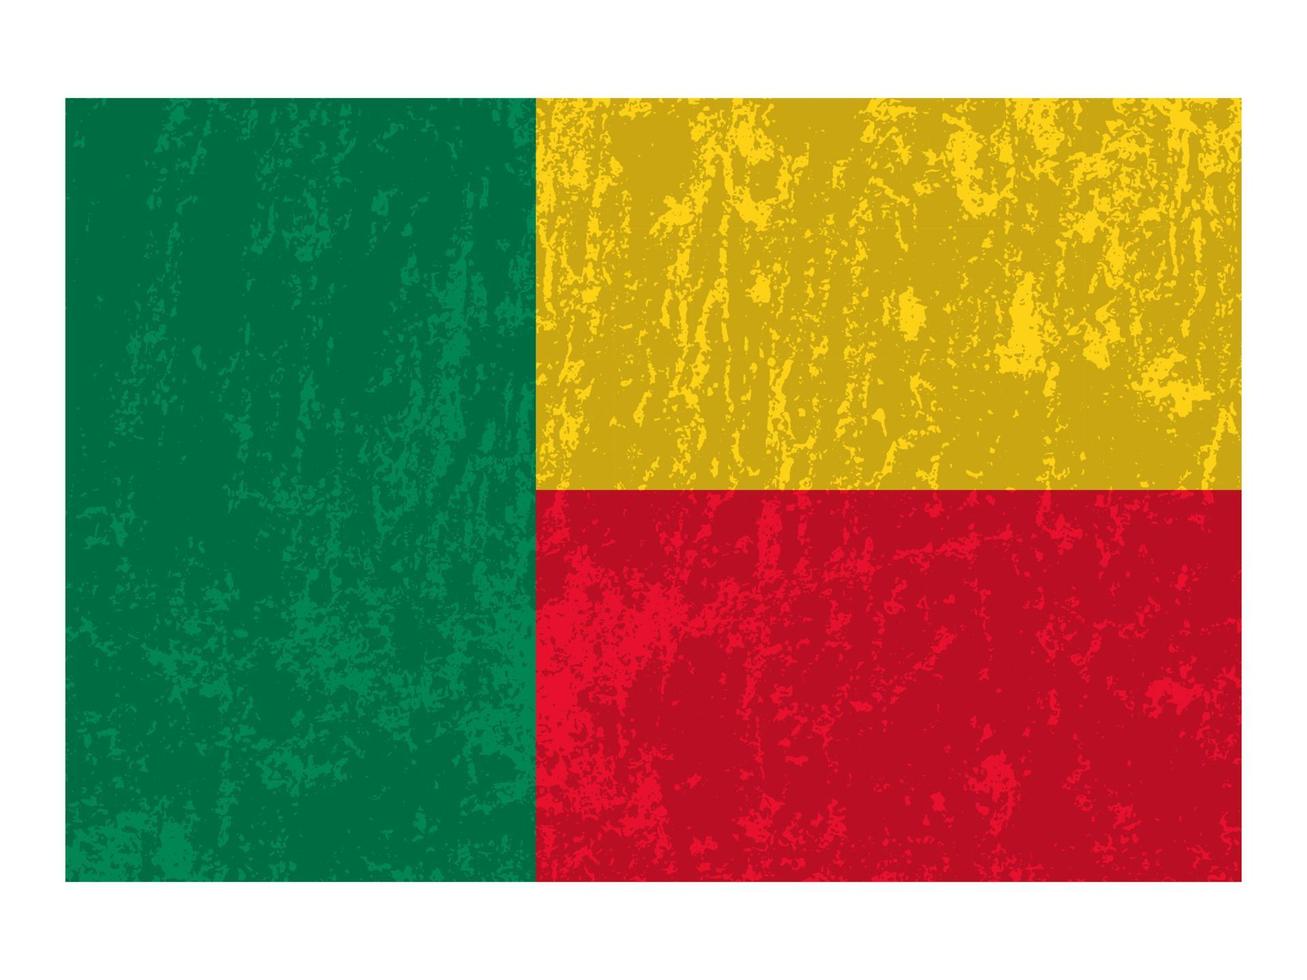 Benin grunge flag, official colors and proportion. Vector illustration.